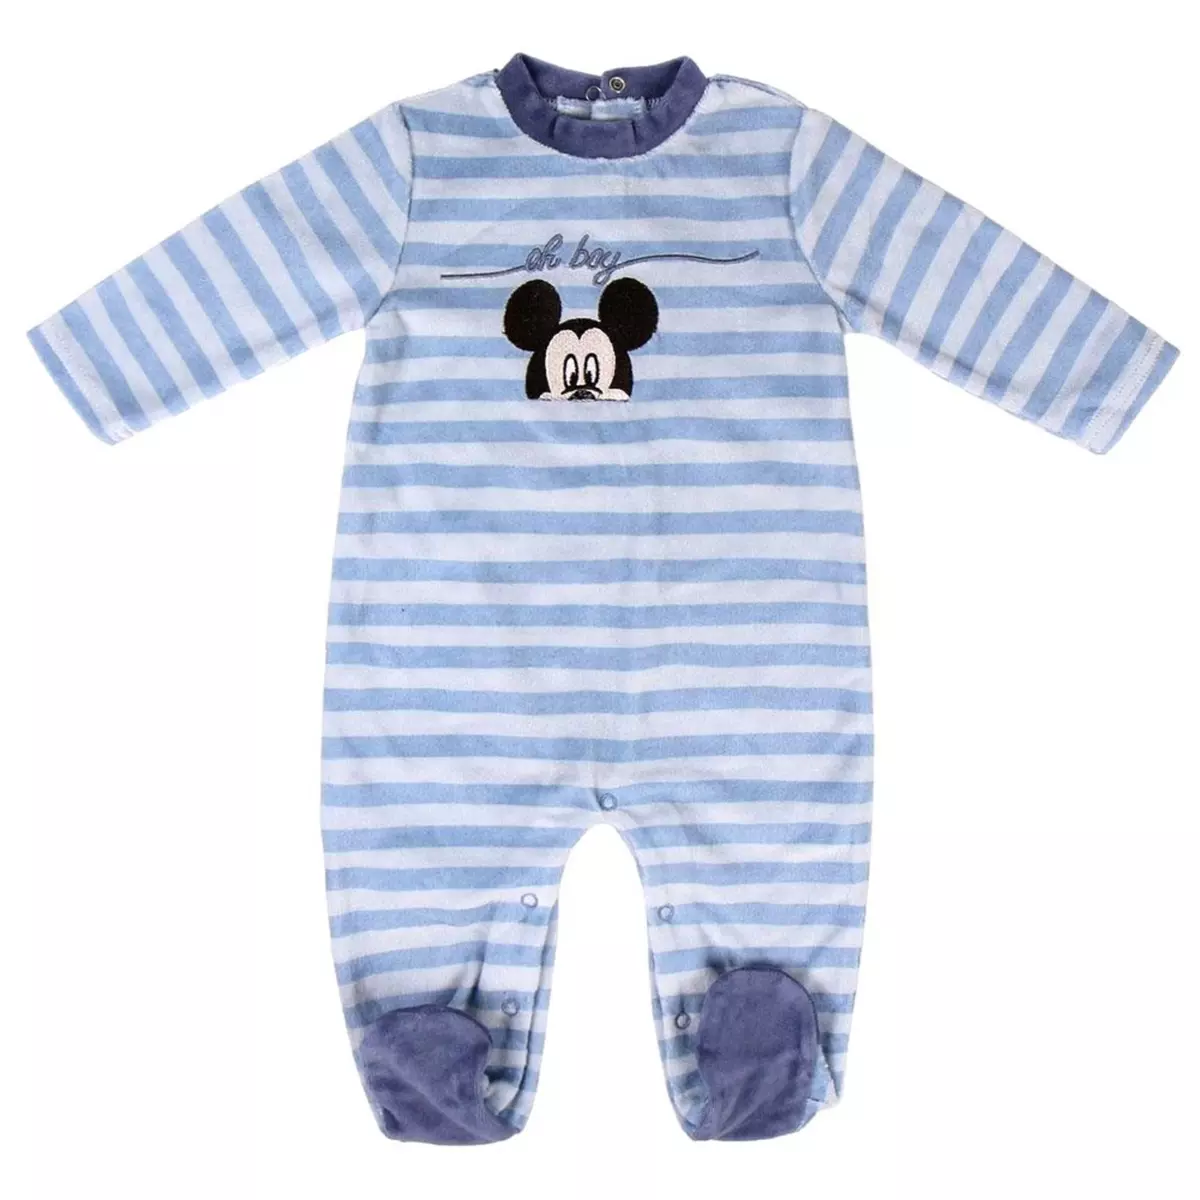 DISNEY Dors bien Mickey taille 3 mois Pyjamas bebe cadeau naissance